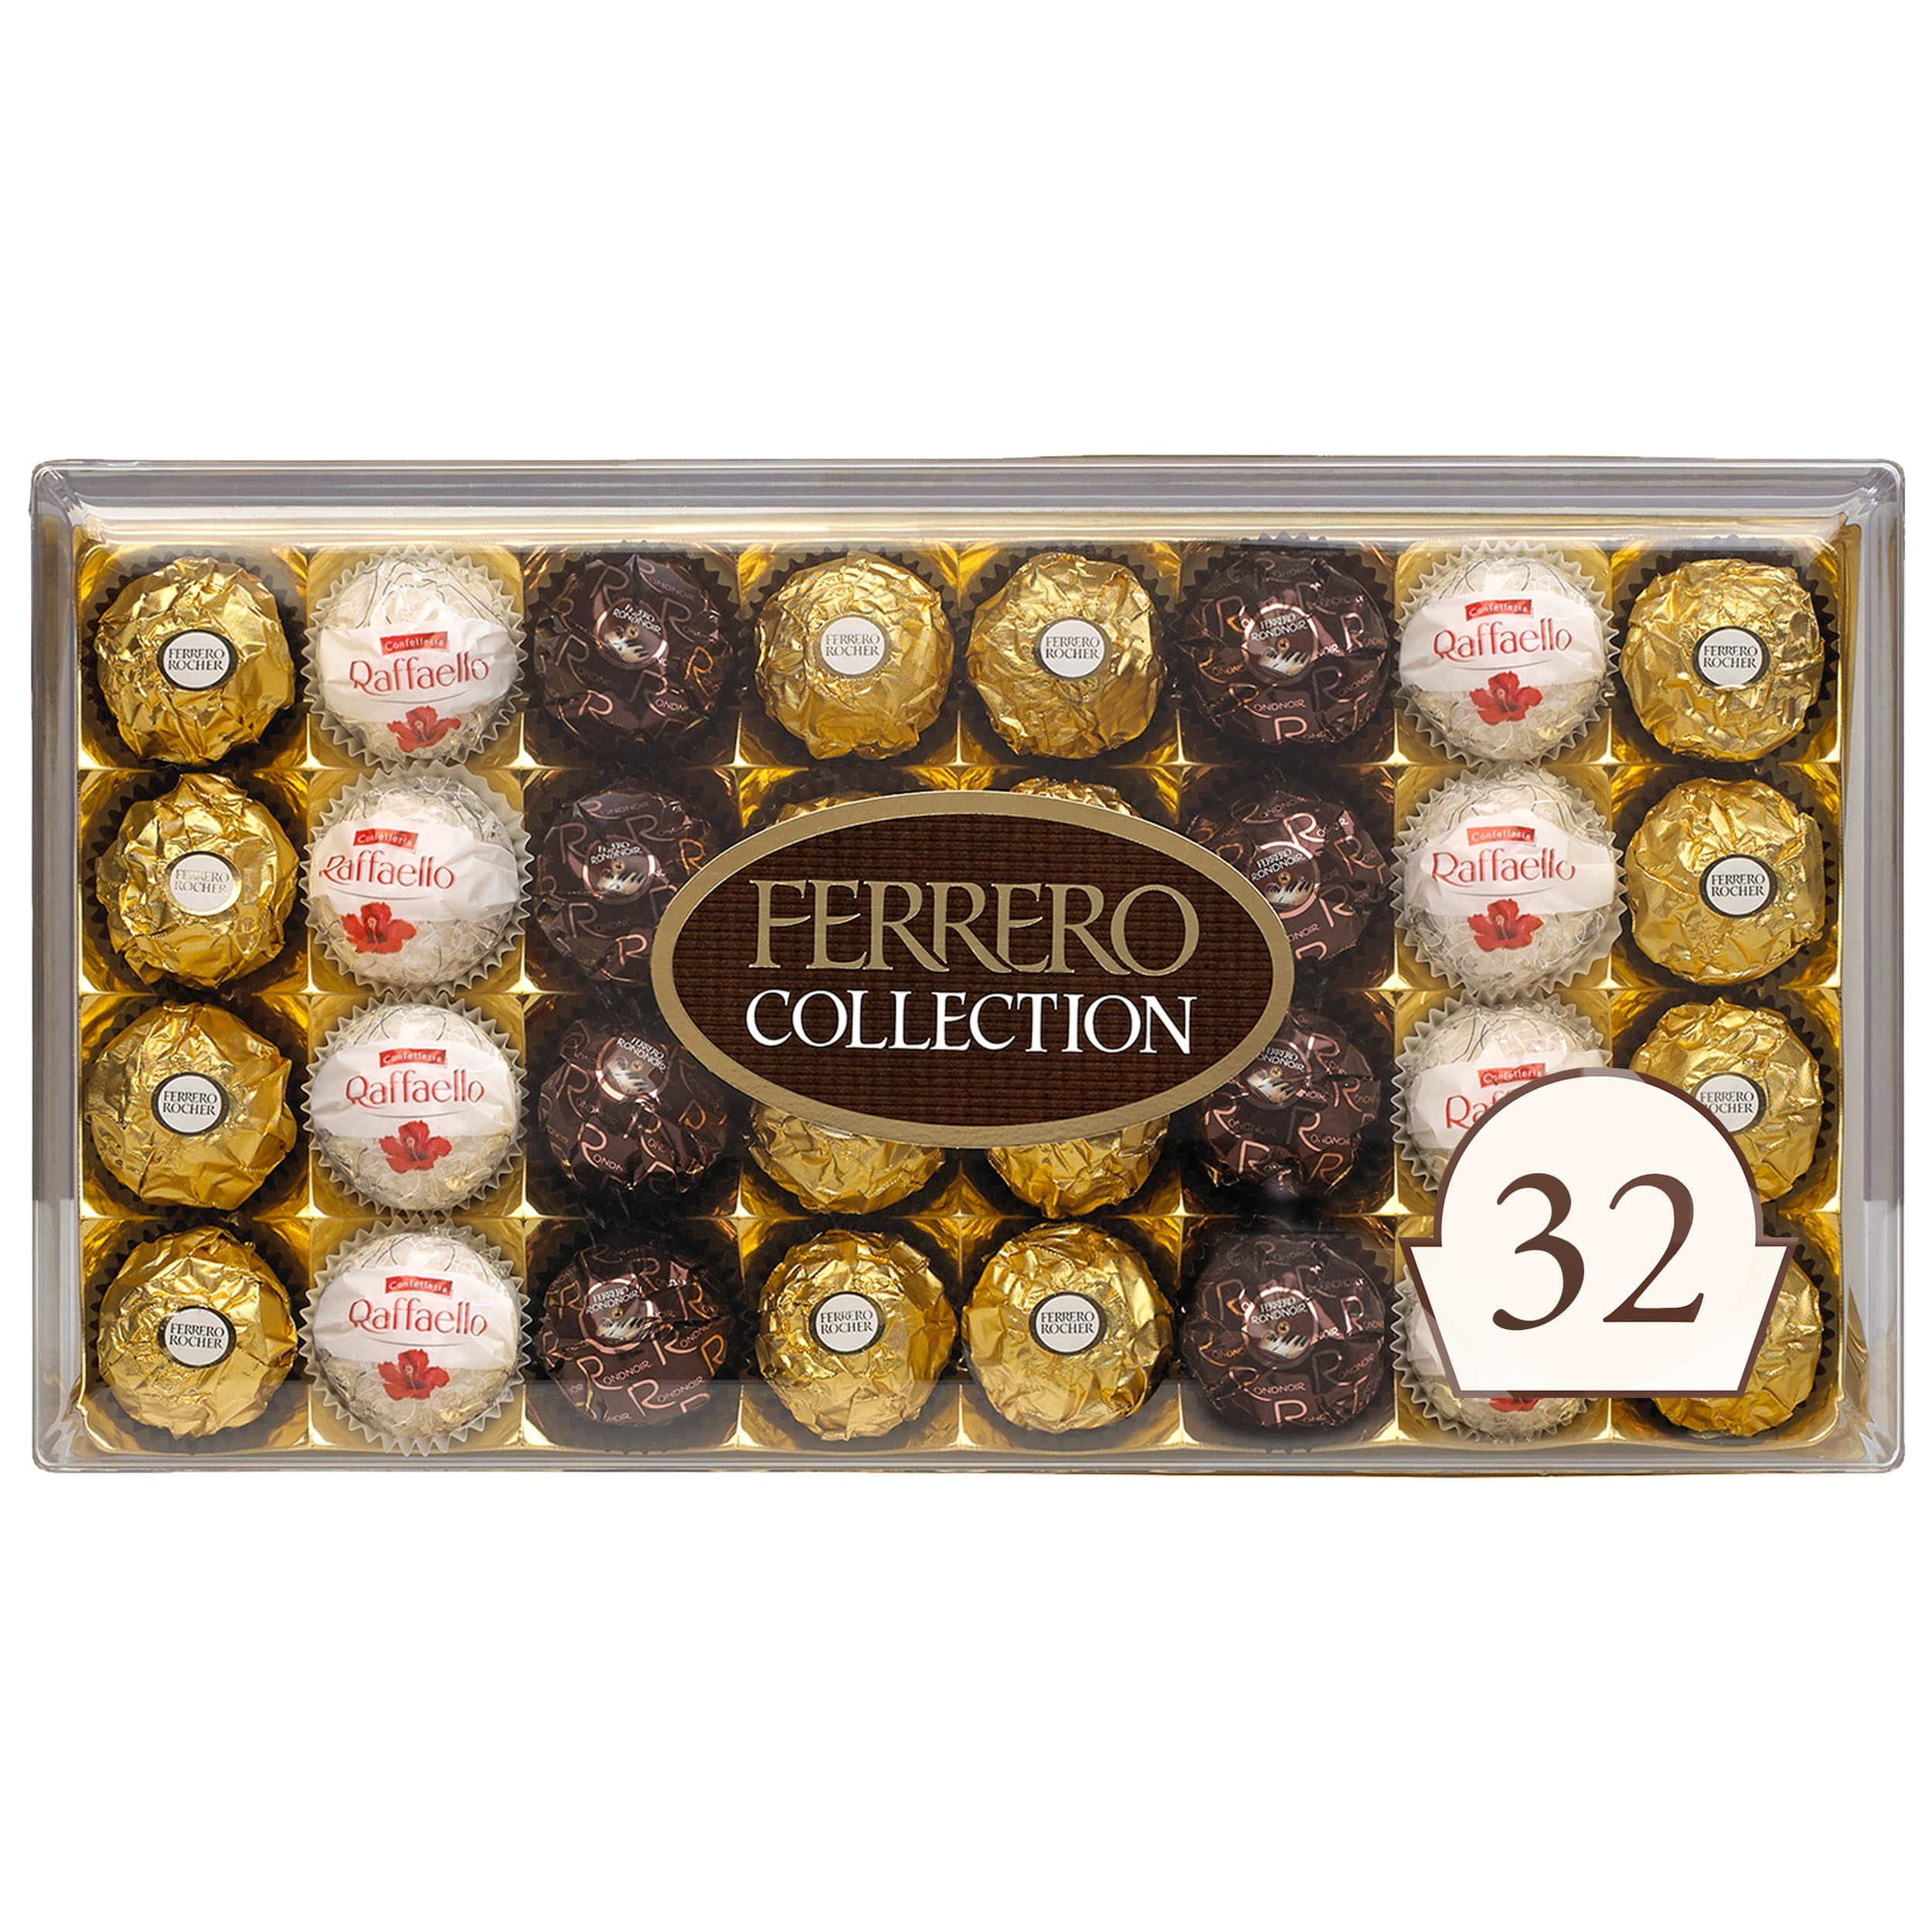  Ferrero Collection, 12 Count, Assorted Milk and Dark